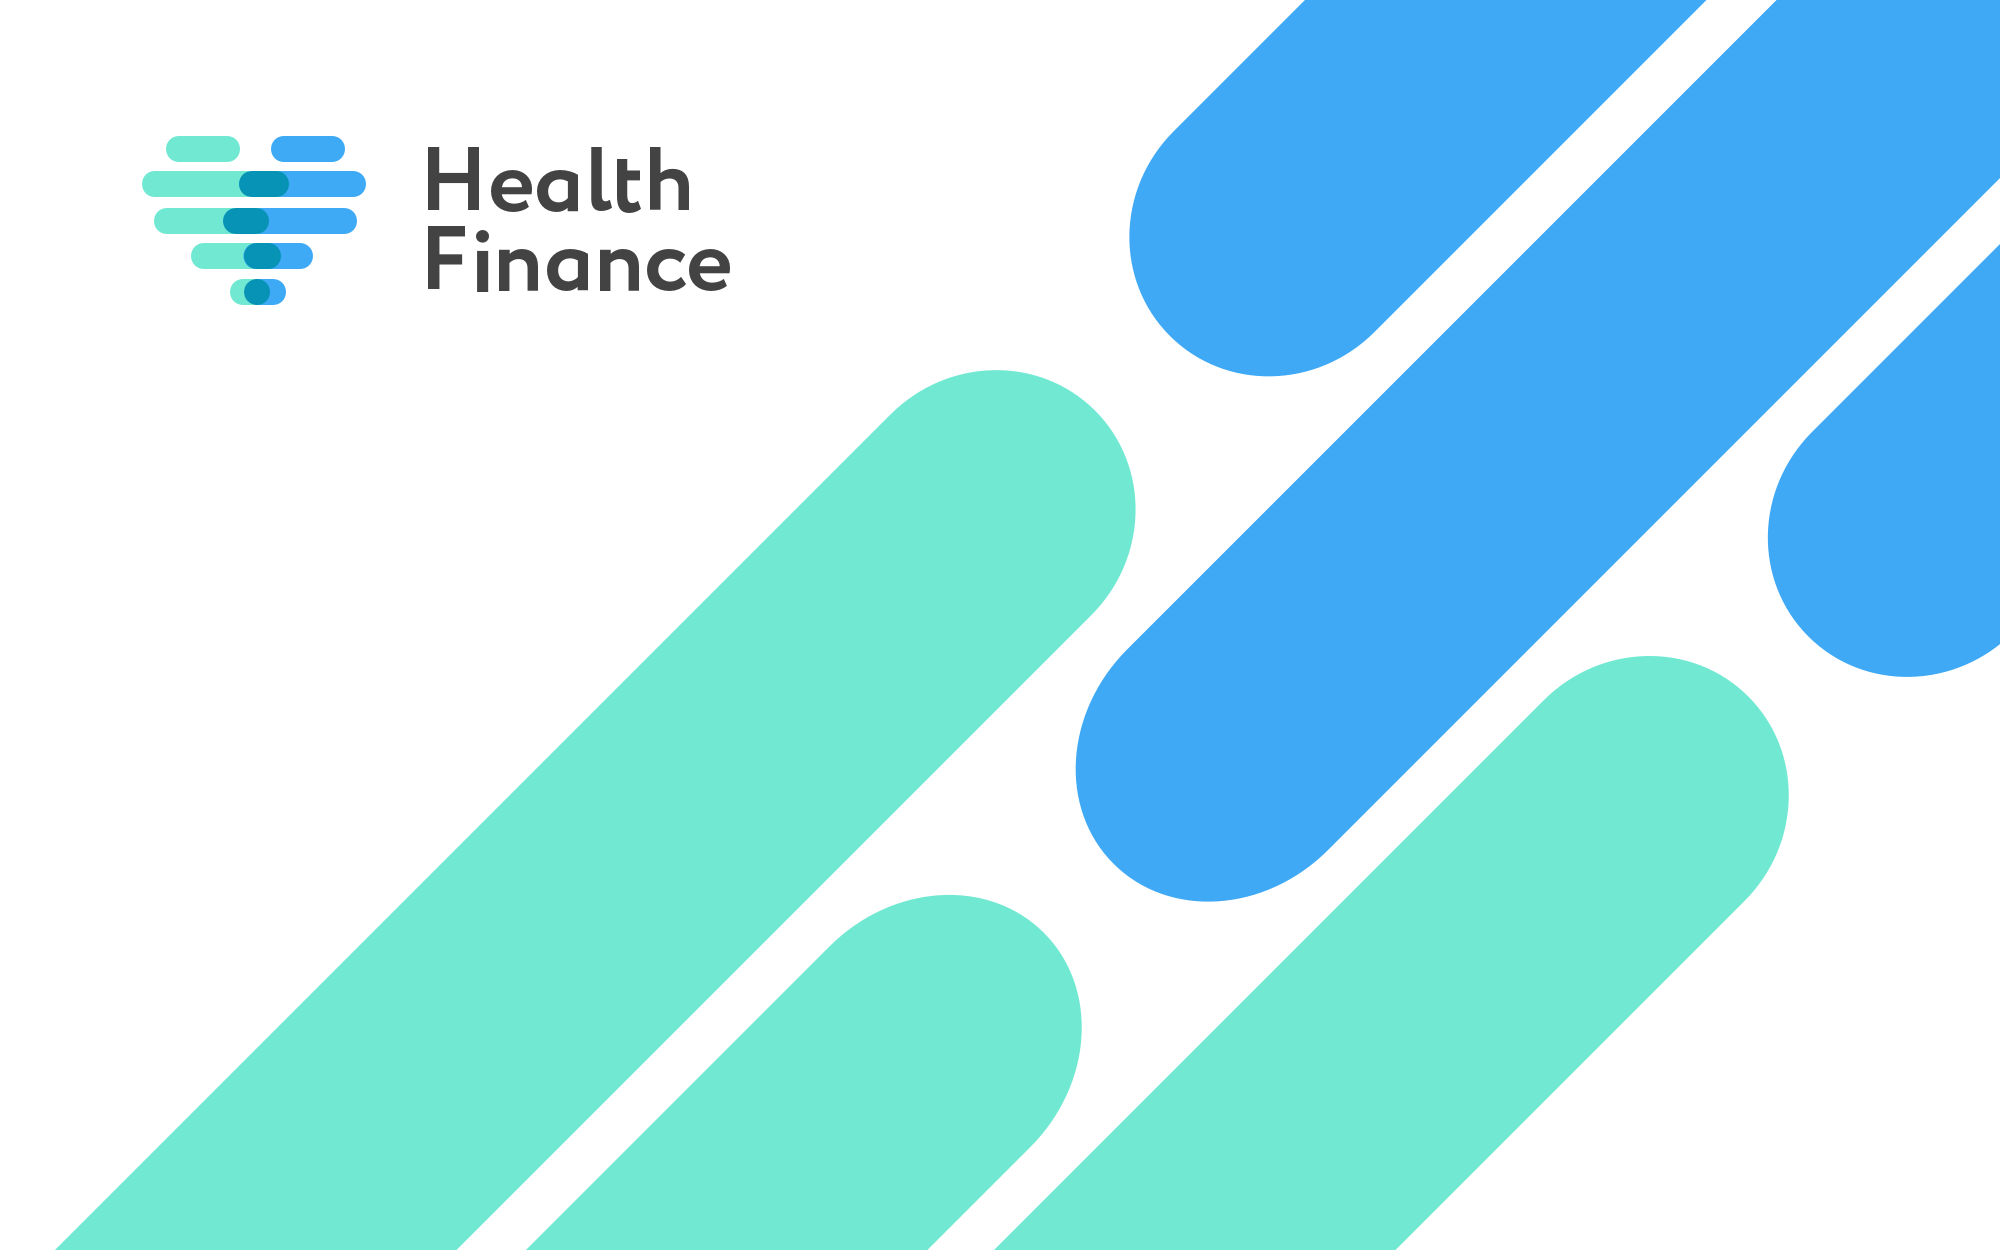 Health Finance logotype design sample.